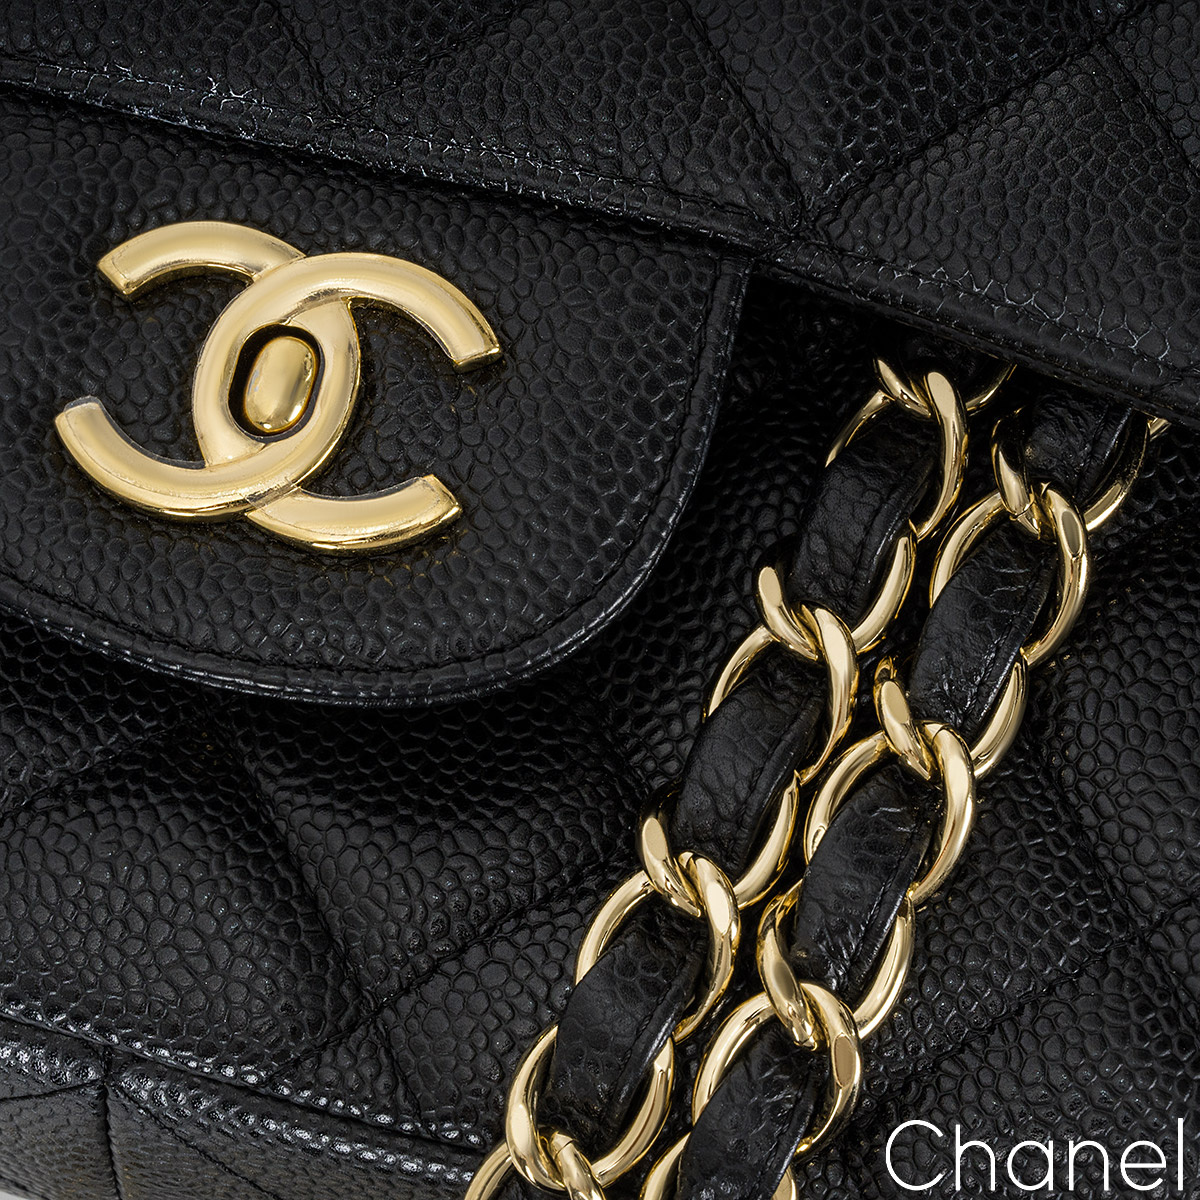 Chanel Black Caviar Jumbo Classic Single Flap Bag